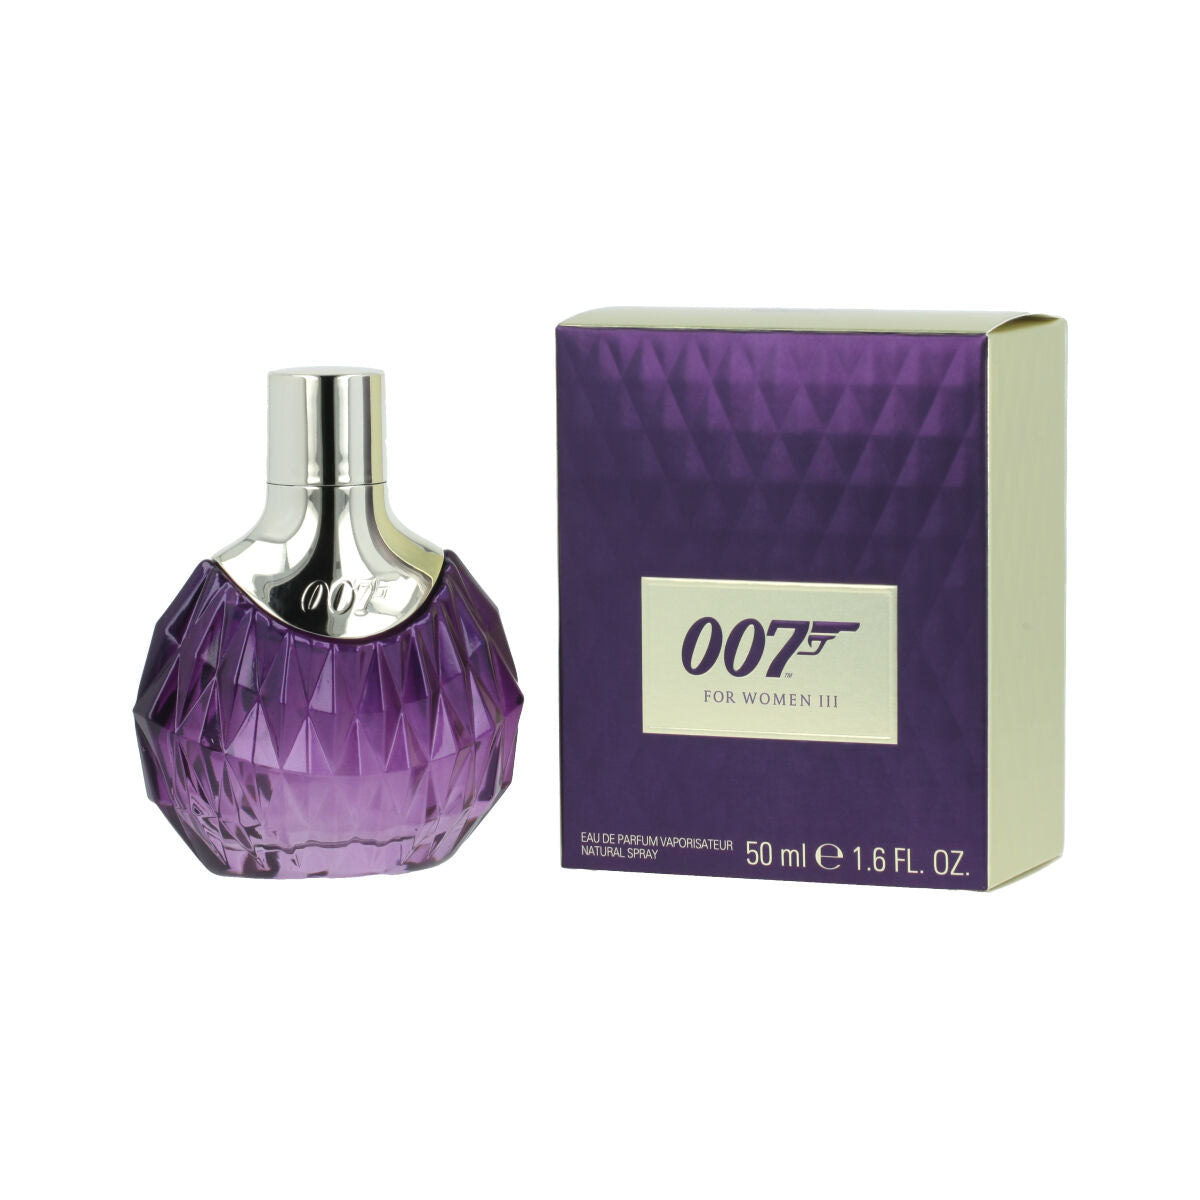 Damesparfum James Bond 007 James Bond 007 for Women III EDP 50 ml